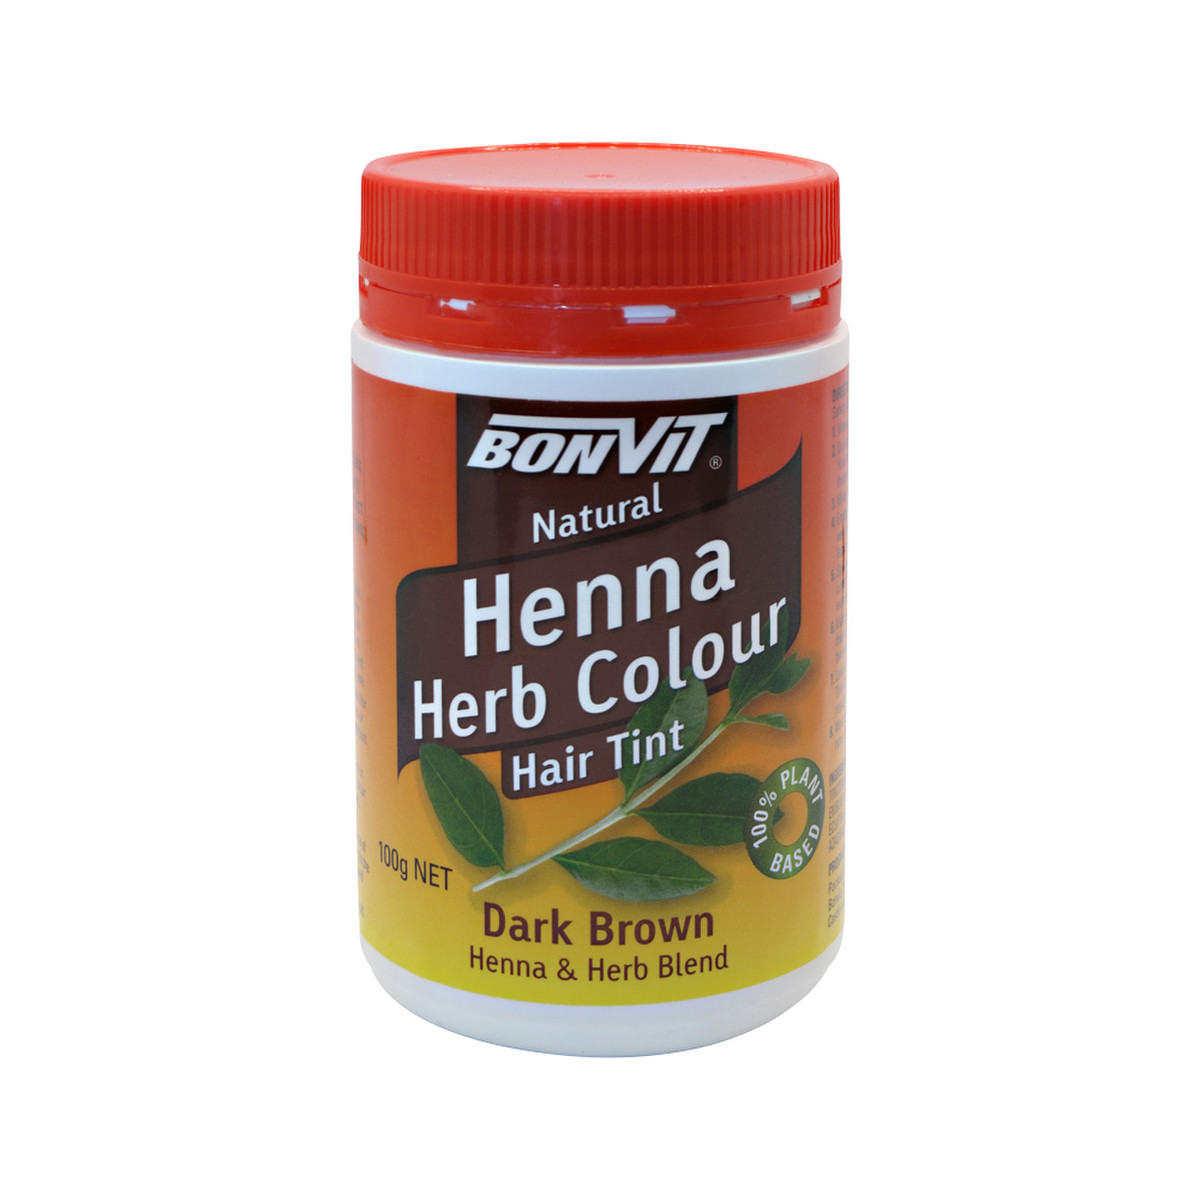 Bonvit Henna Herb Colour Hair Tint Dark Brown 100g